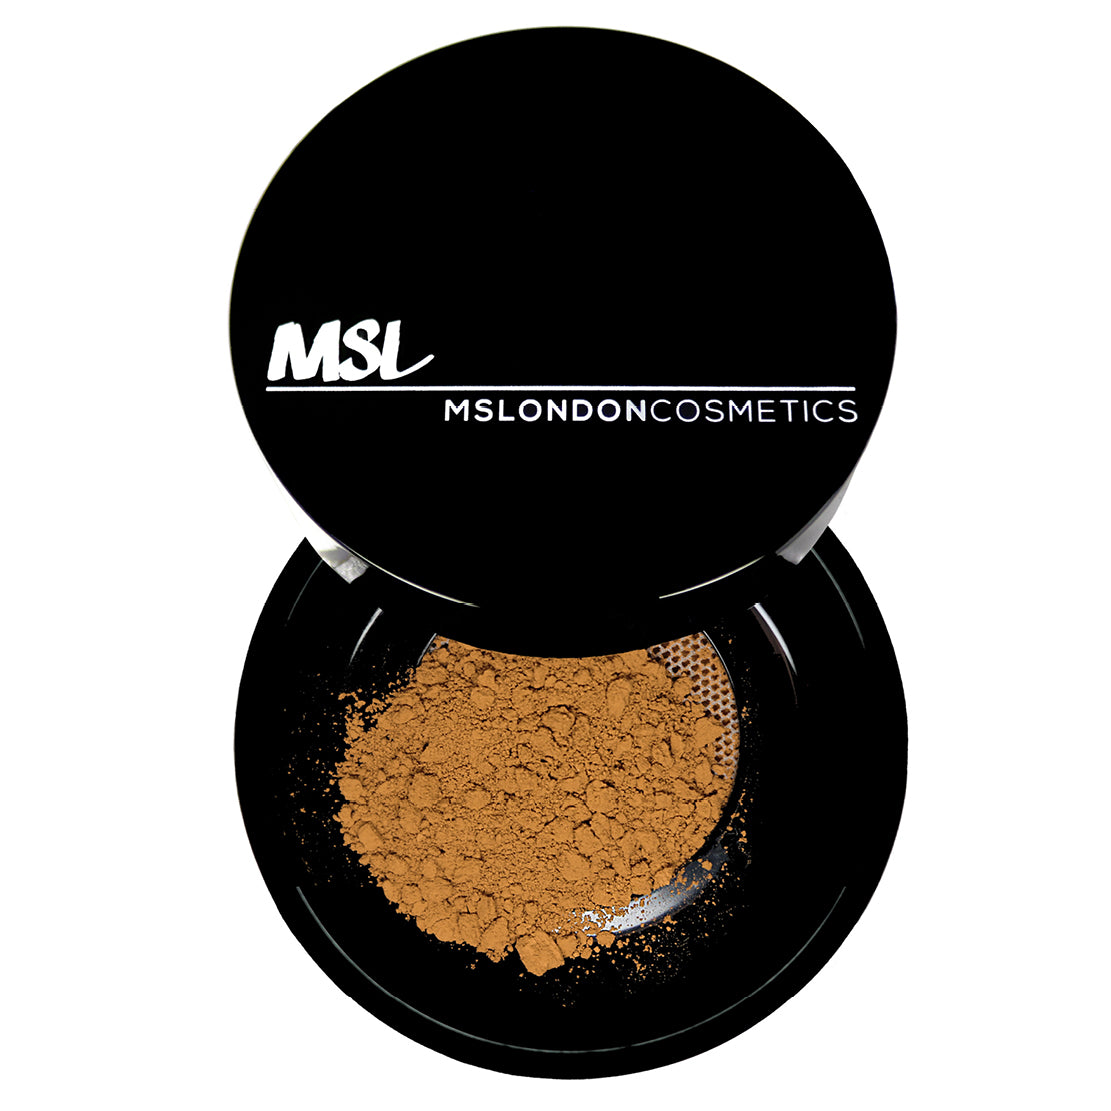 MSL® HD MINERALIZED POWDER BLUSH – MSLondon® Cosmetics